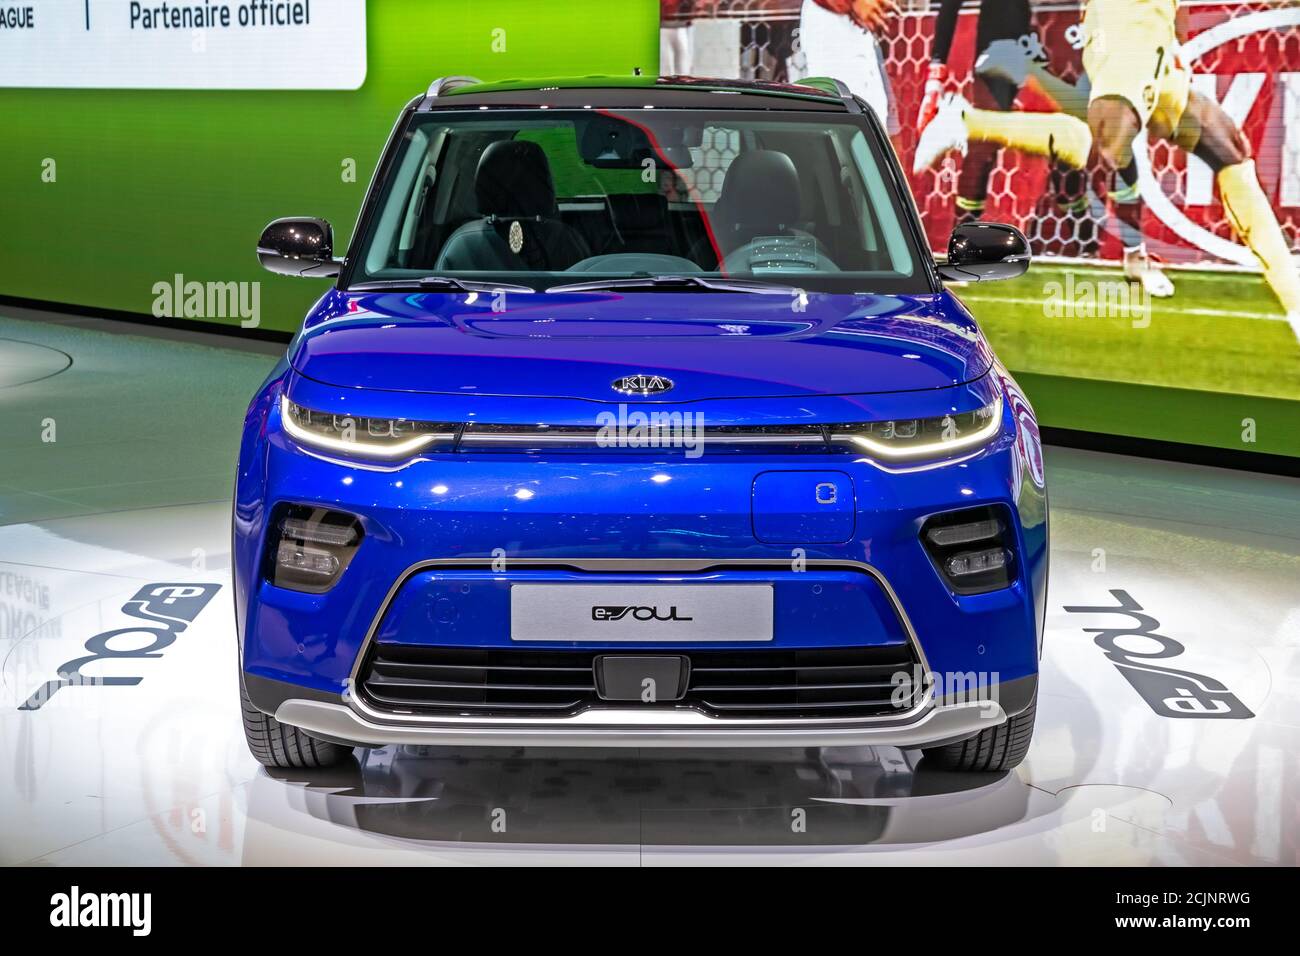 Kia e-Soul electric car at the 89th Geneva International Motor Show. Geneva, Switzerland - March 5, 2019. Stock Photo